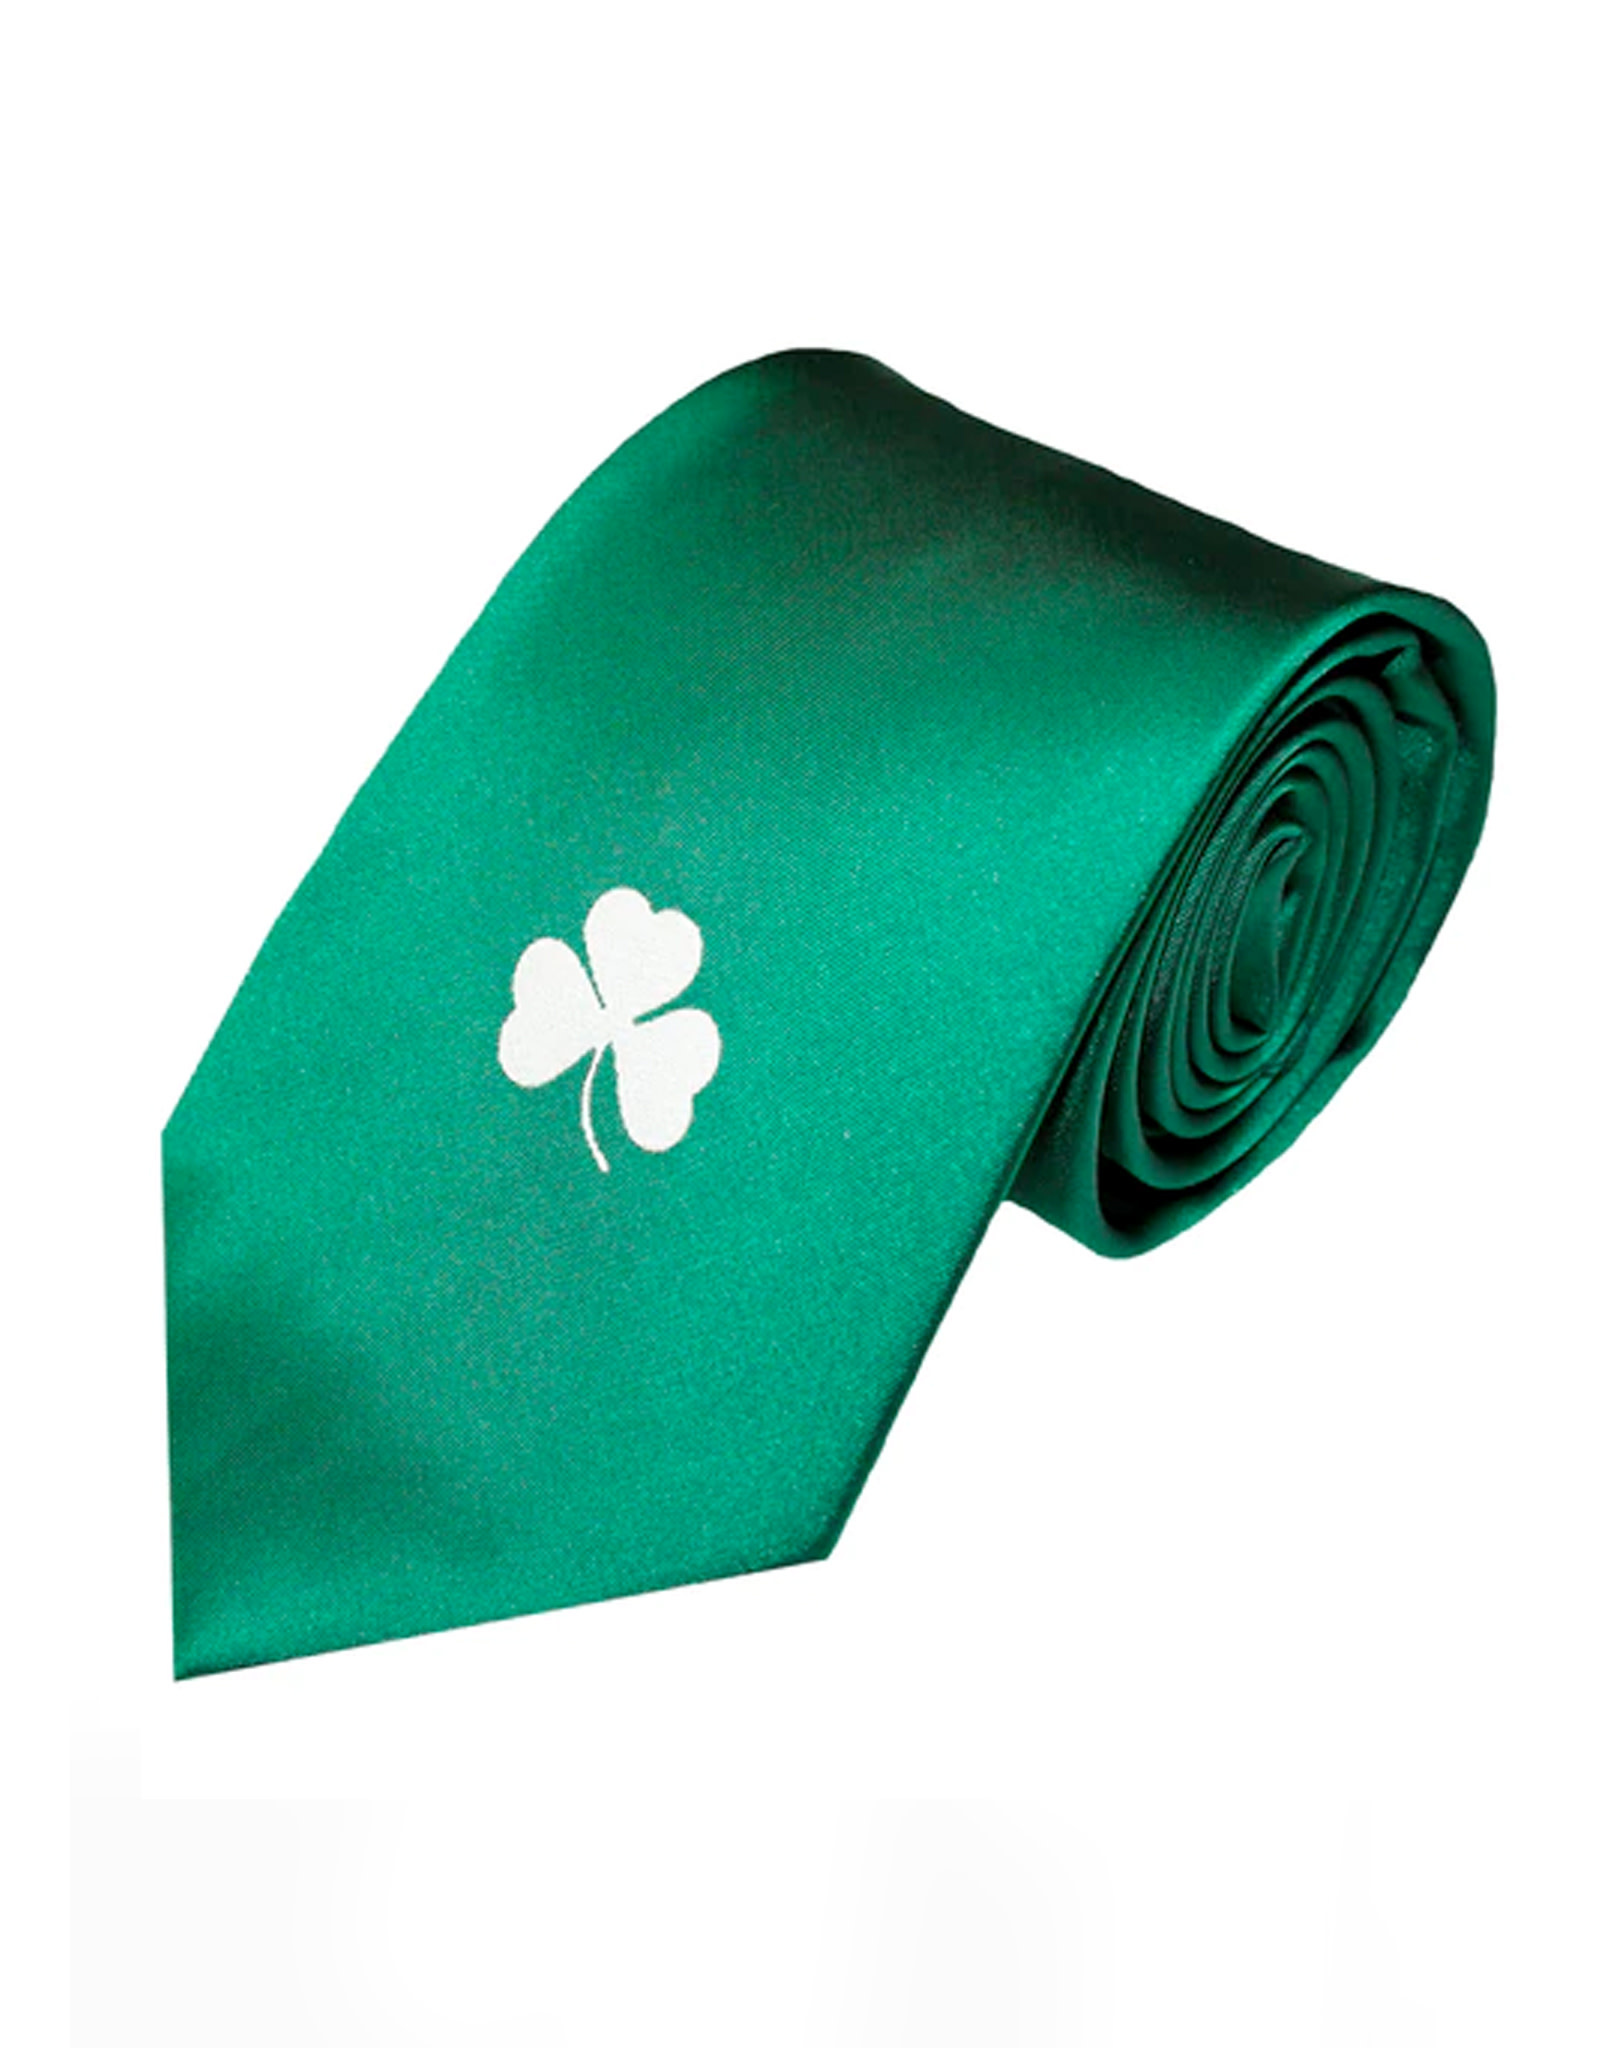 ACCESSORIES DONEGAL BAY TIE - Irish Solid Green Shamrock